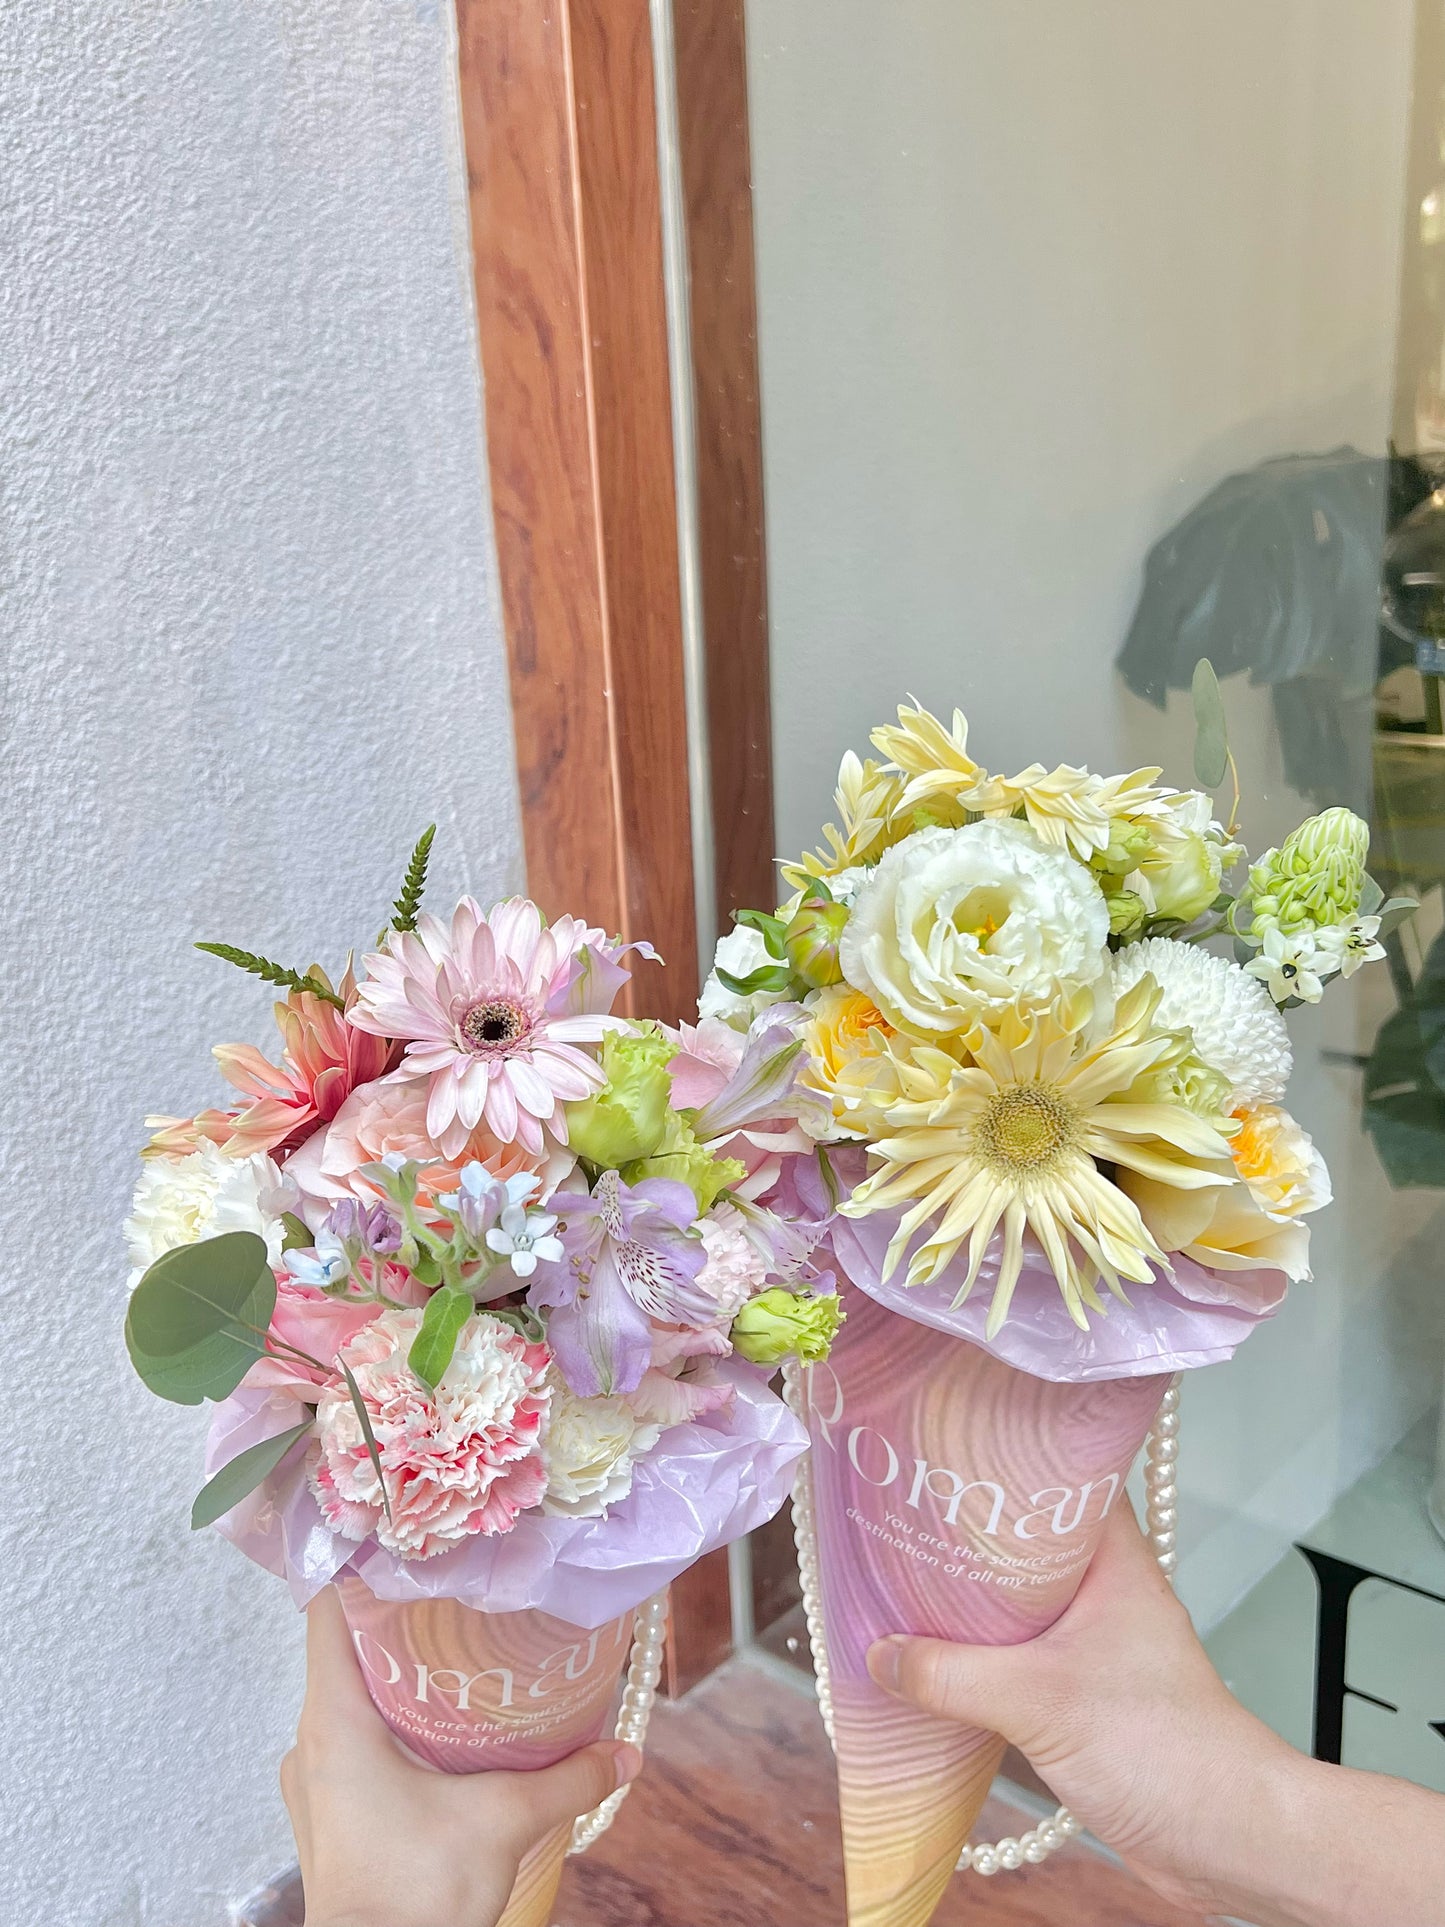 冰淇淋花筒花藝班 | Floral Ice Cream Cone